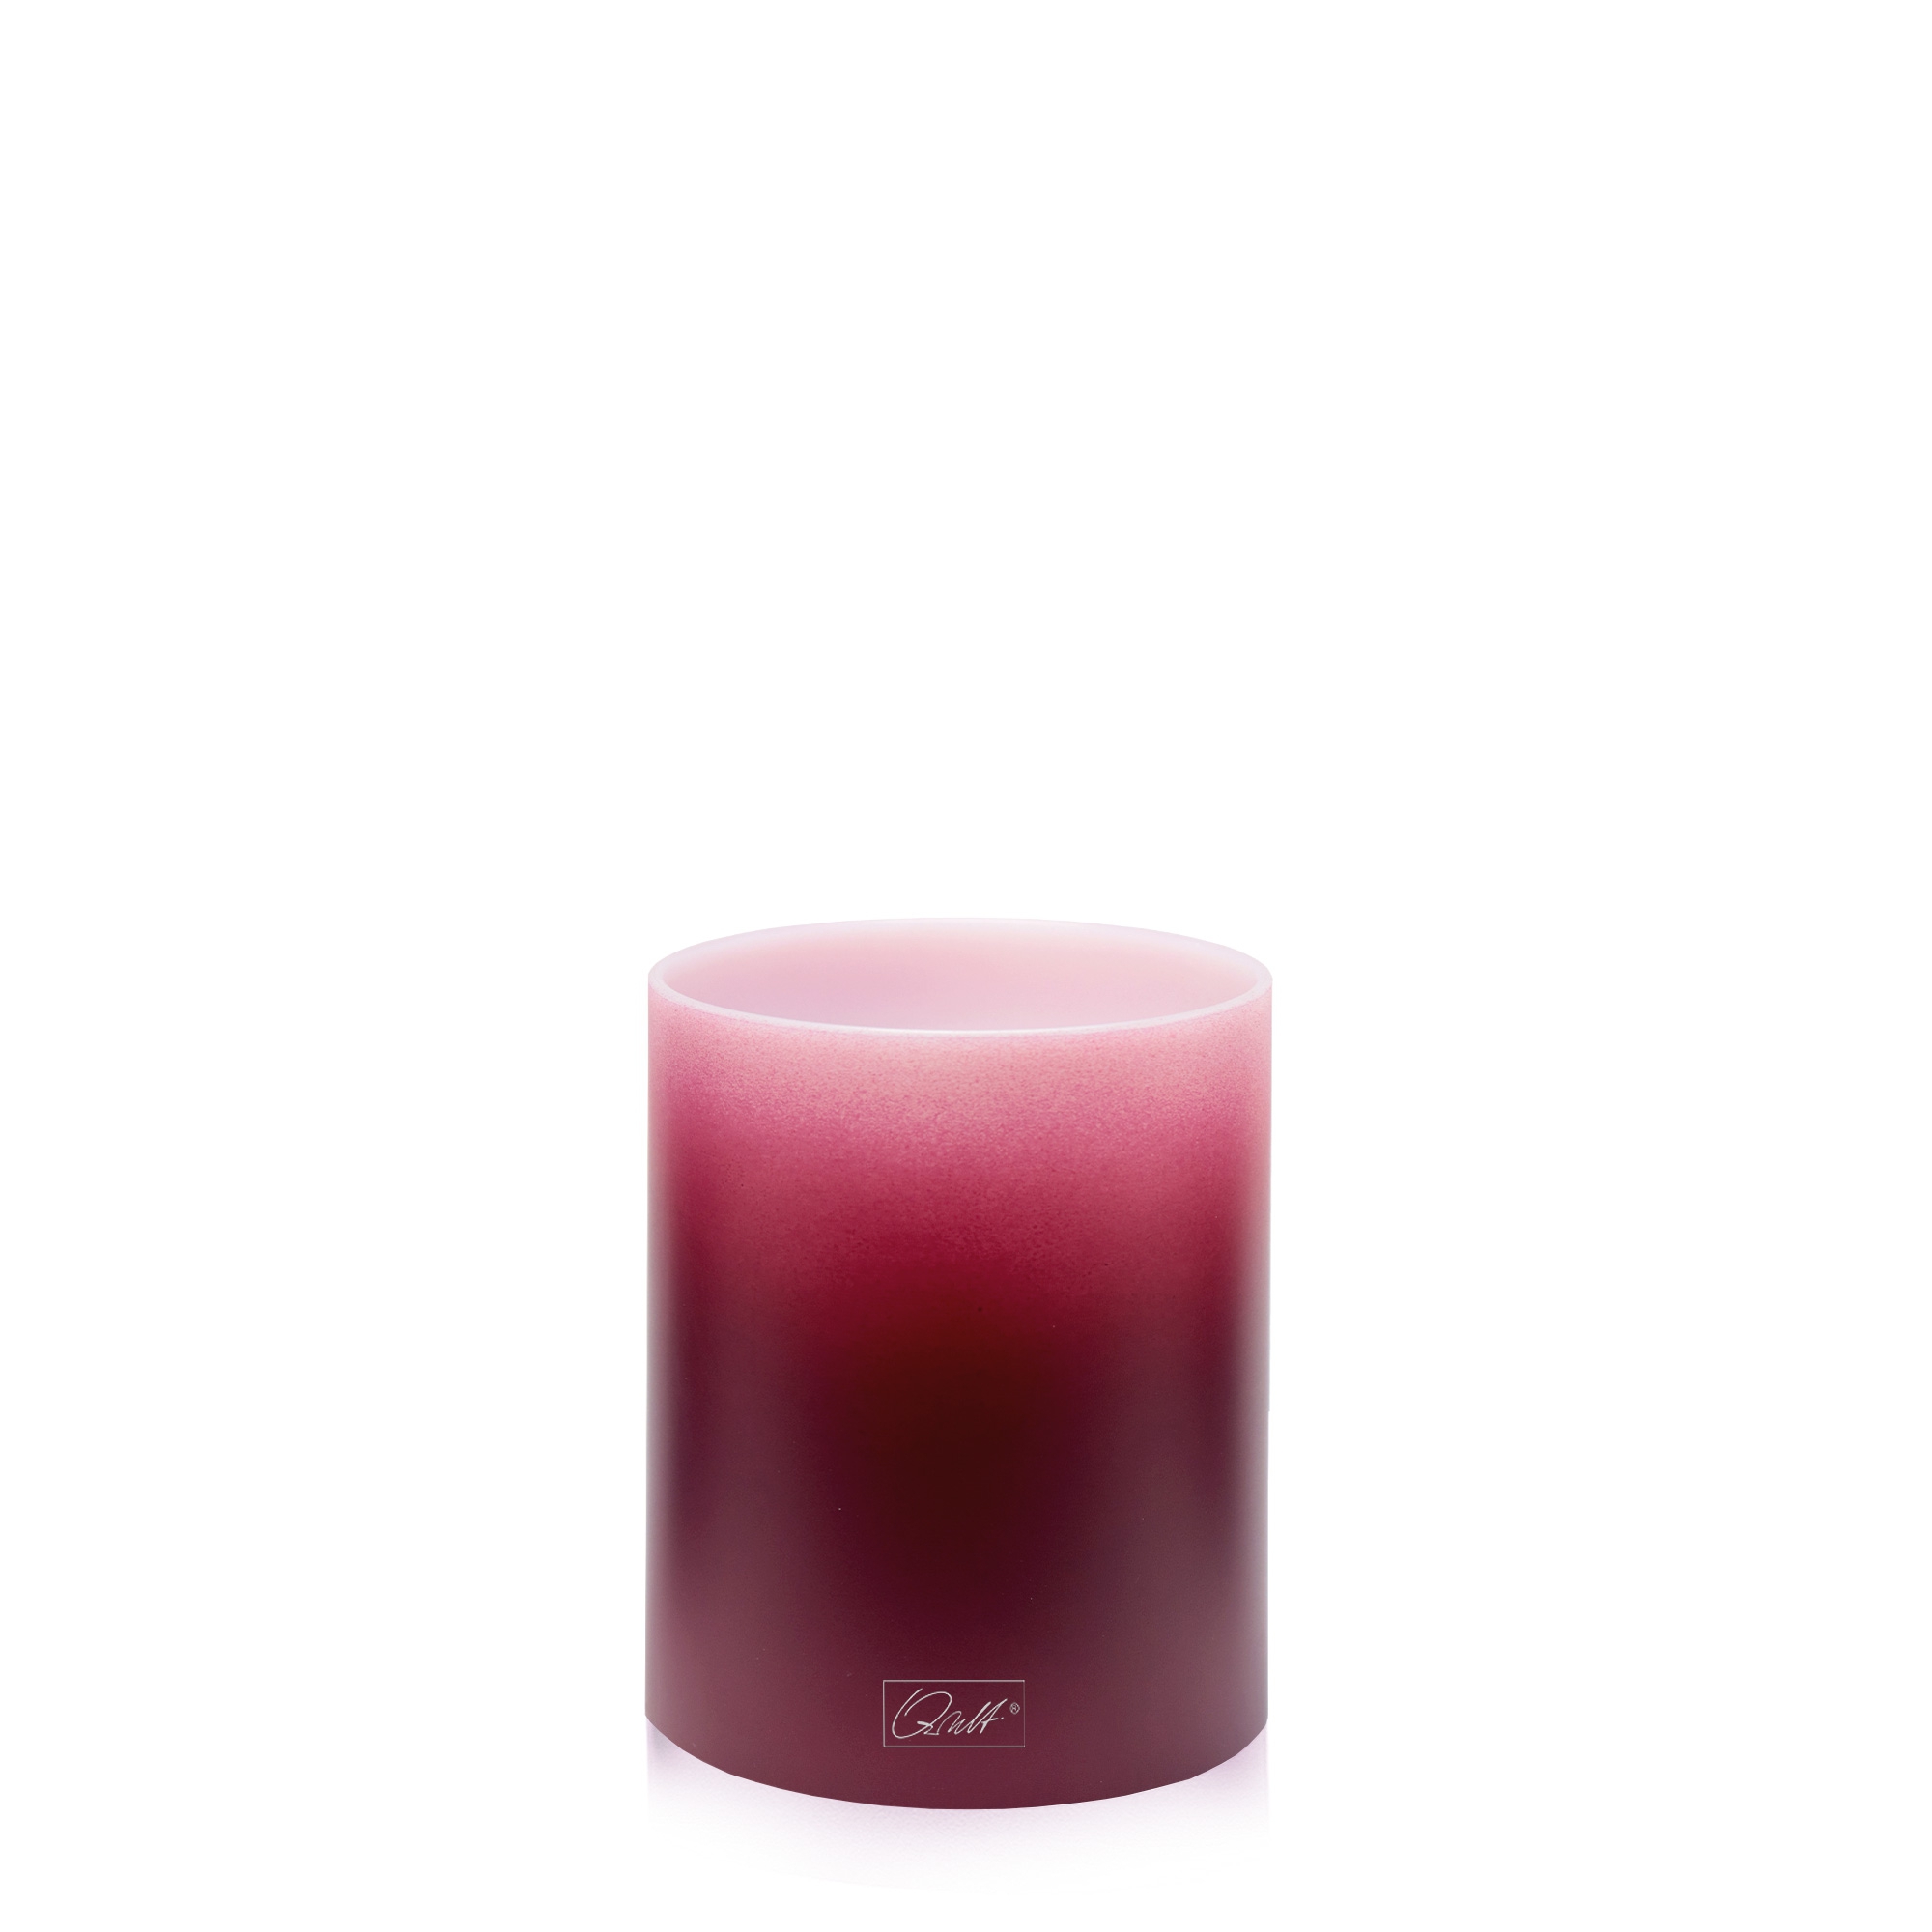 Qult Farluce Inside - Tealight Candle Holder Ø 8 X H 9 cm - Black Berry